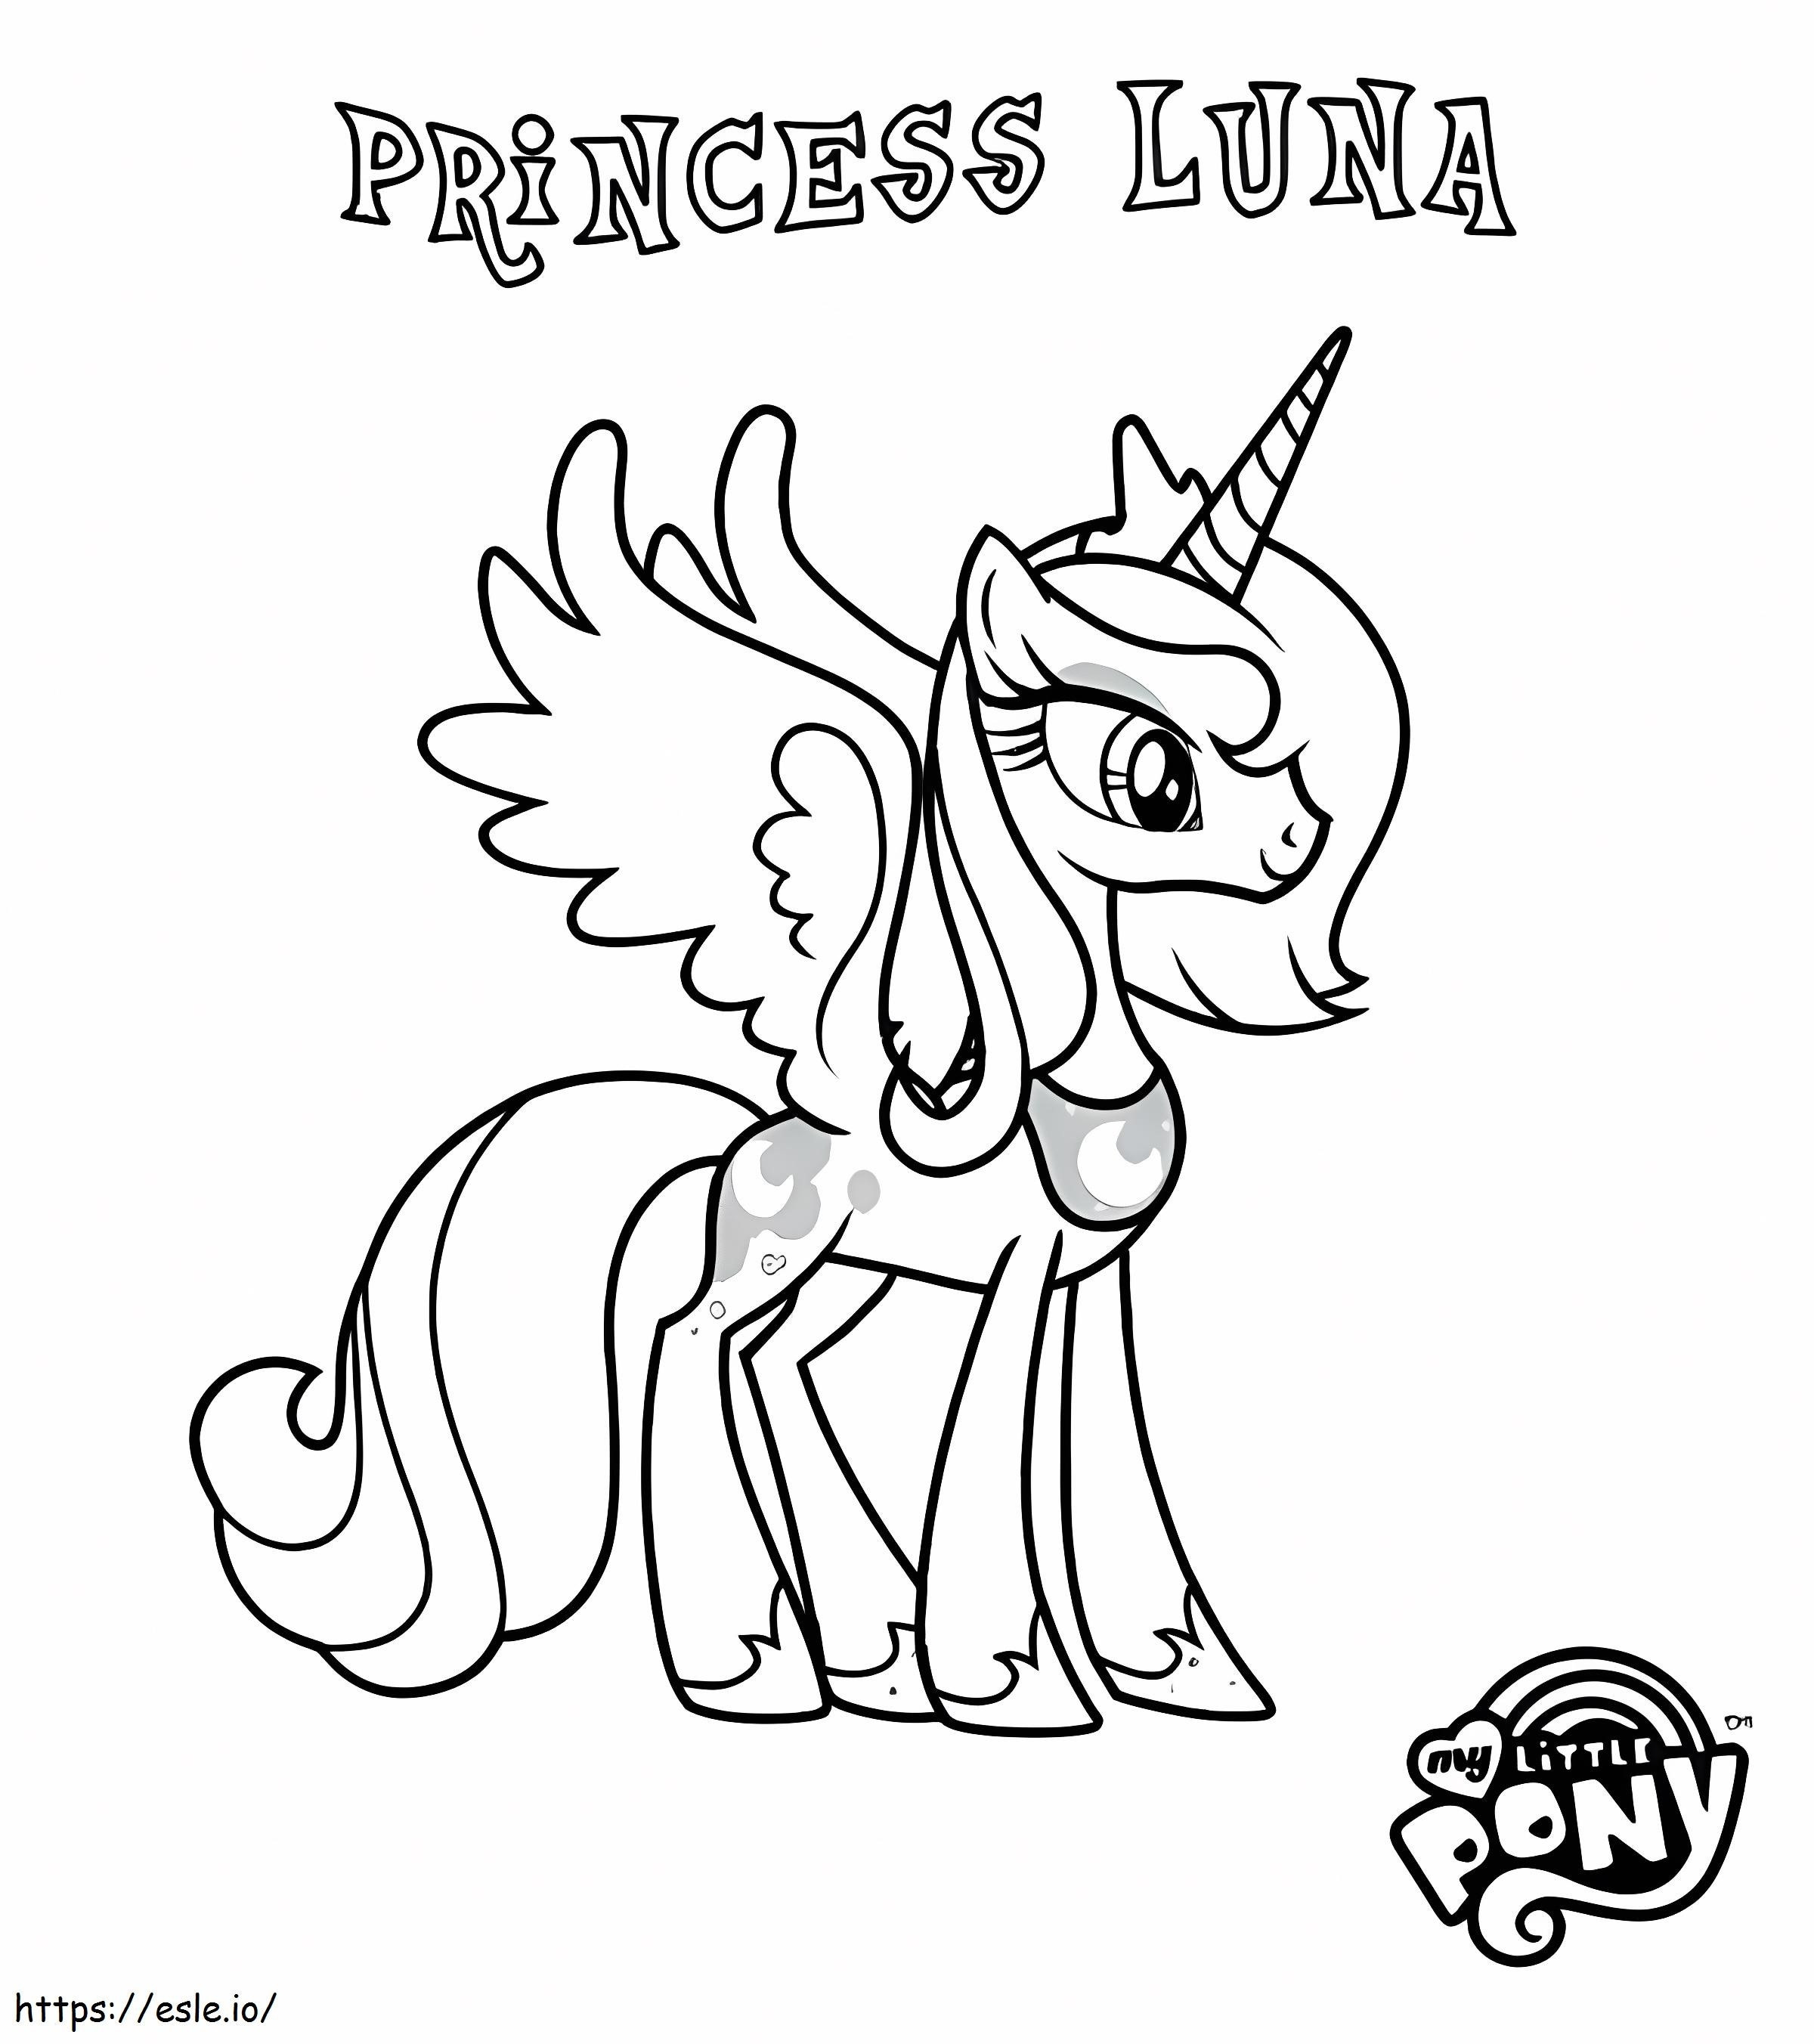 MLP Princess Luna coloring page